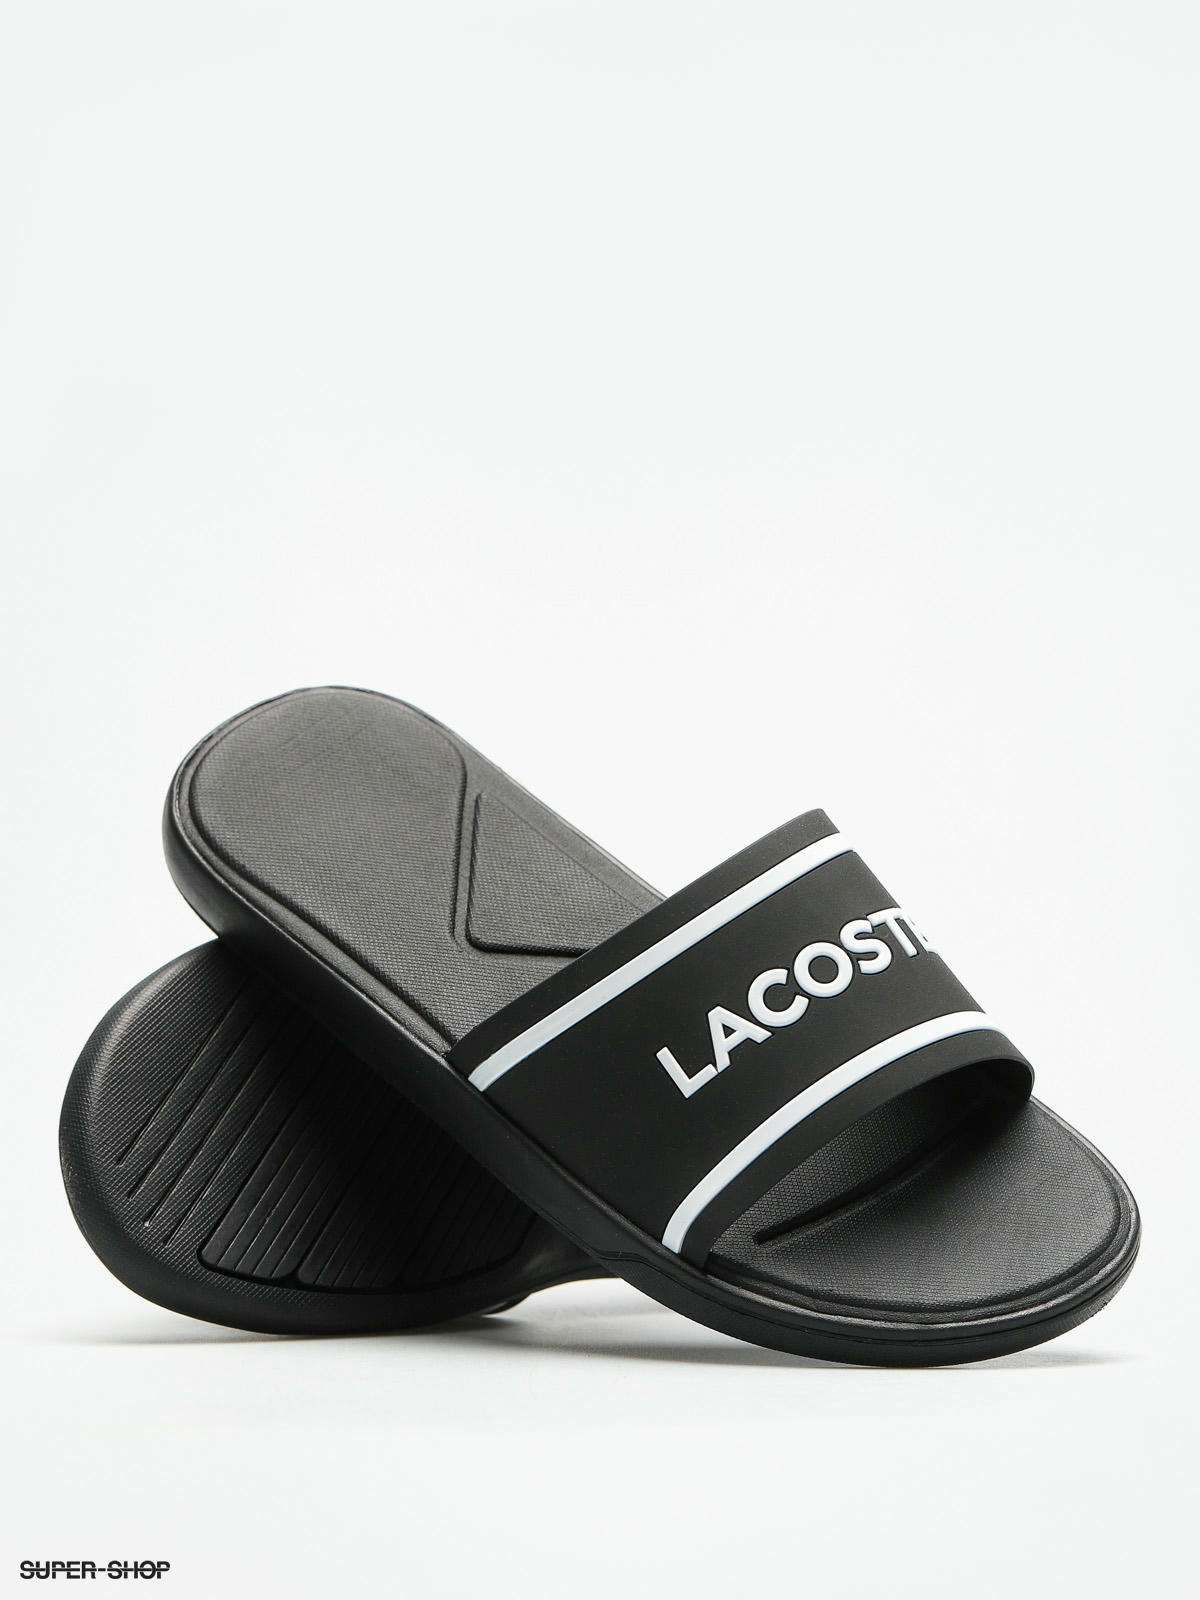 lacoste slides black and white